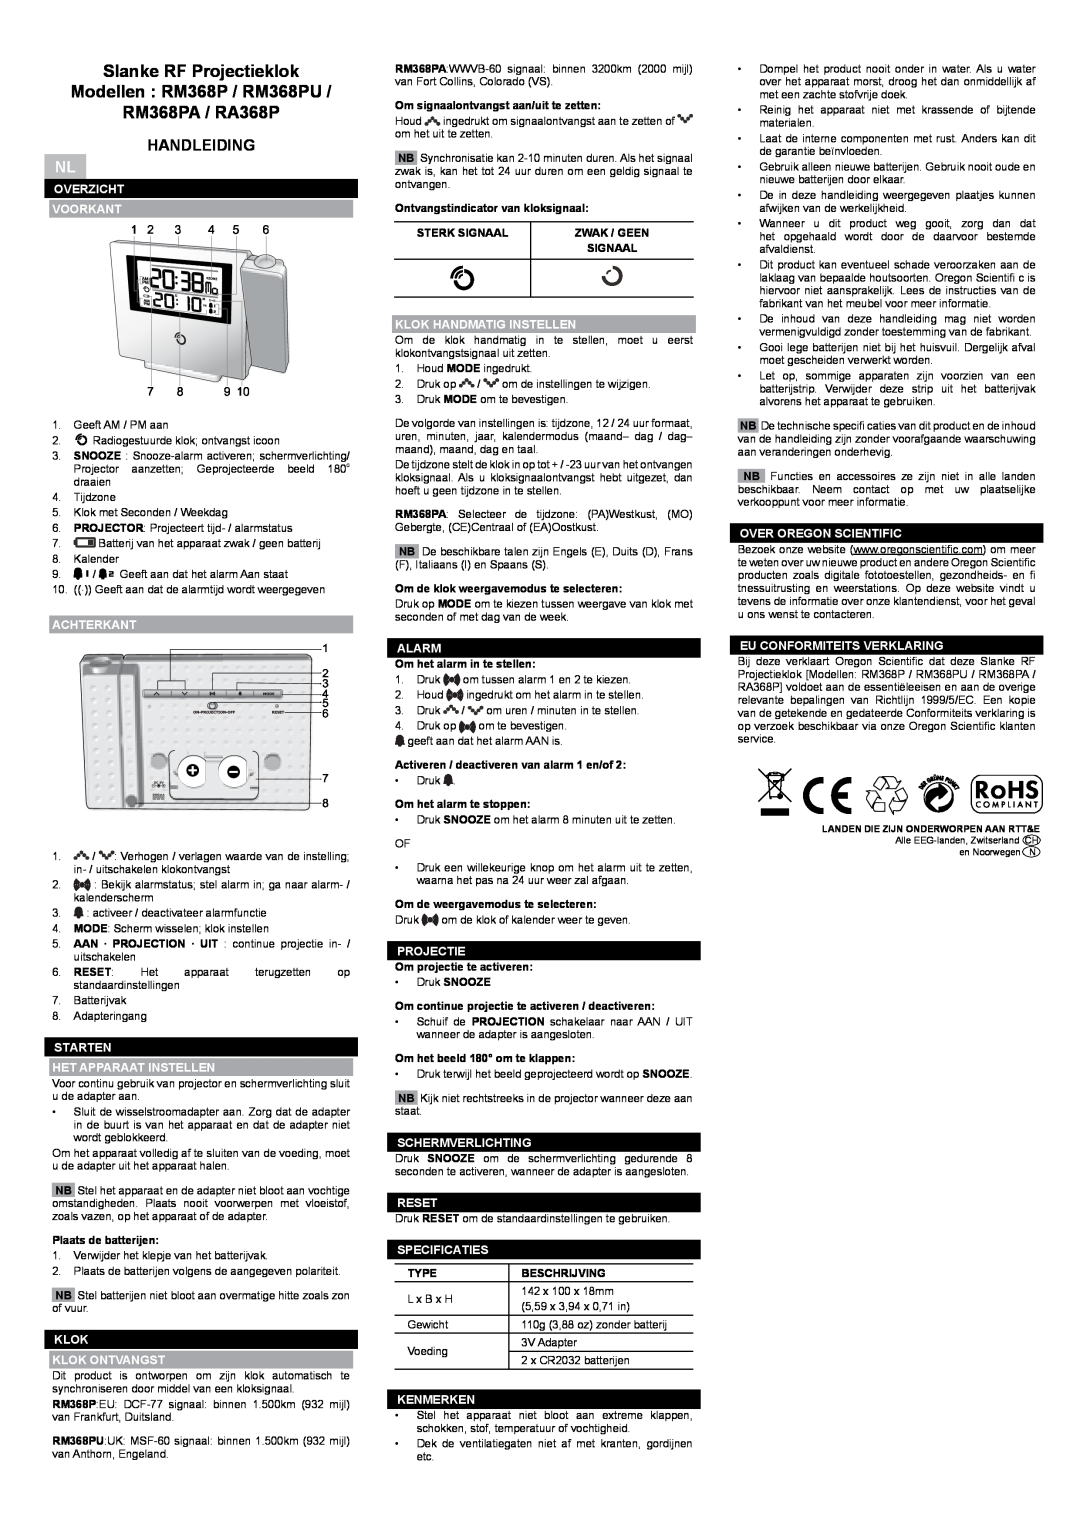 Oregon user manual Slanke RF Projectieklok Modellen RM368P / RM368PU RM368PA / RA368P, Handleiding 